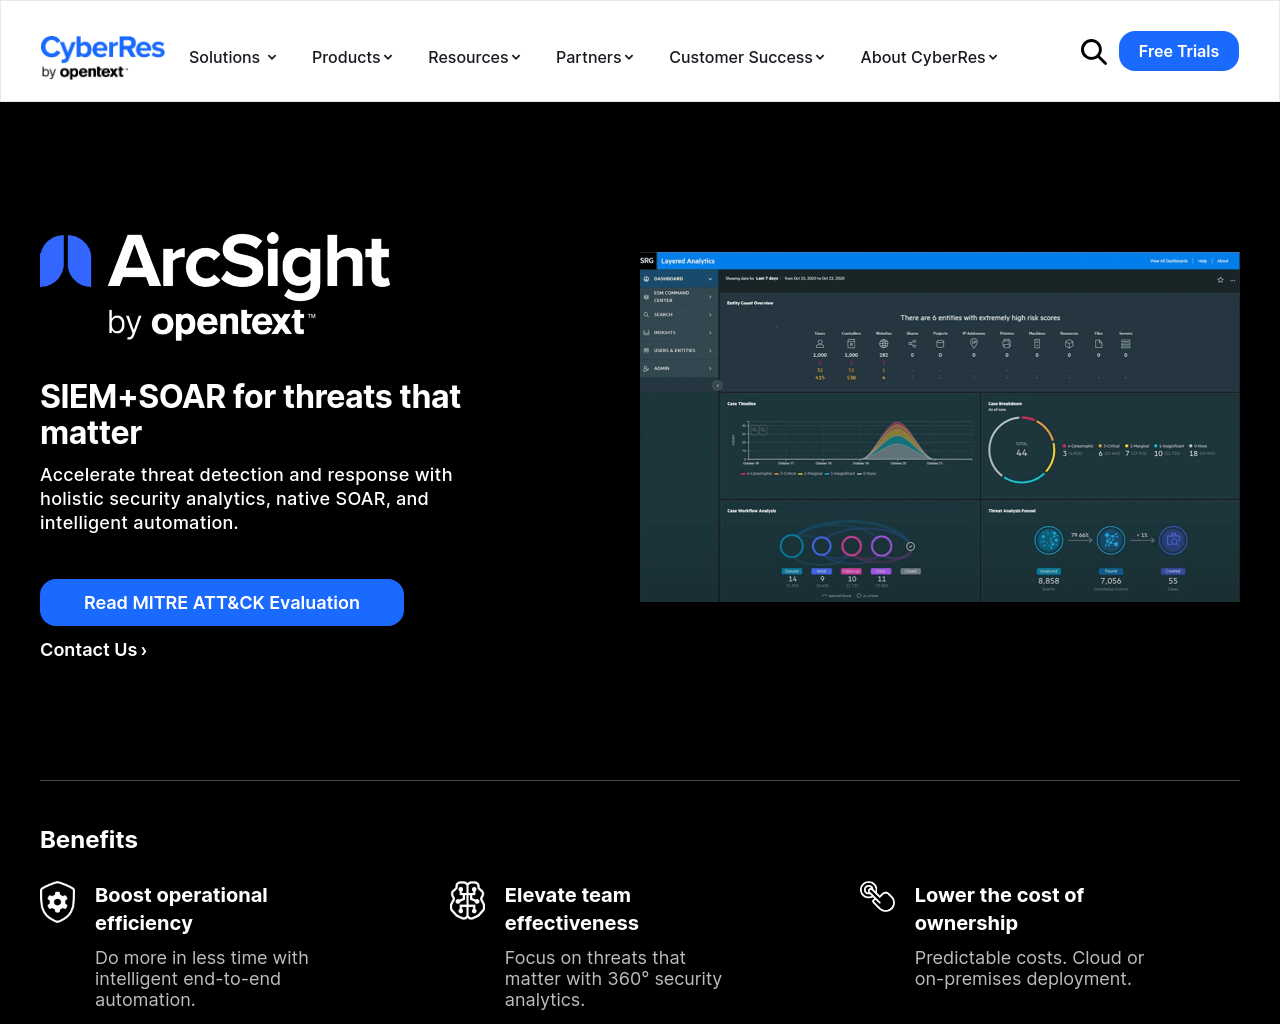 arcsight.com